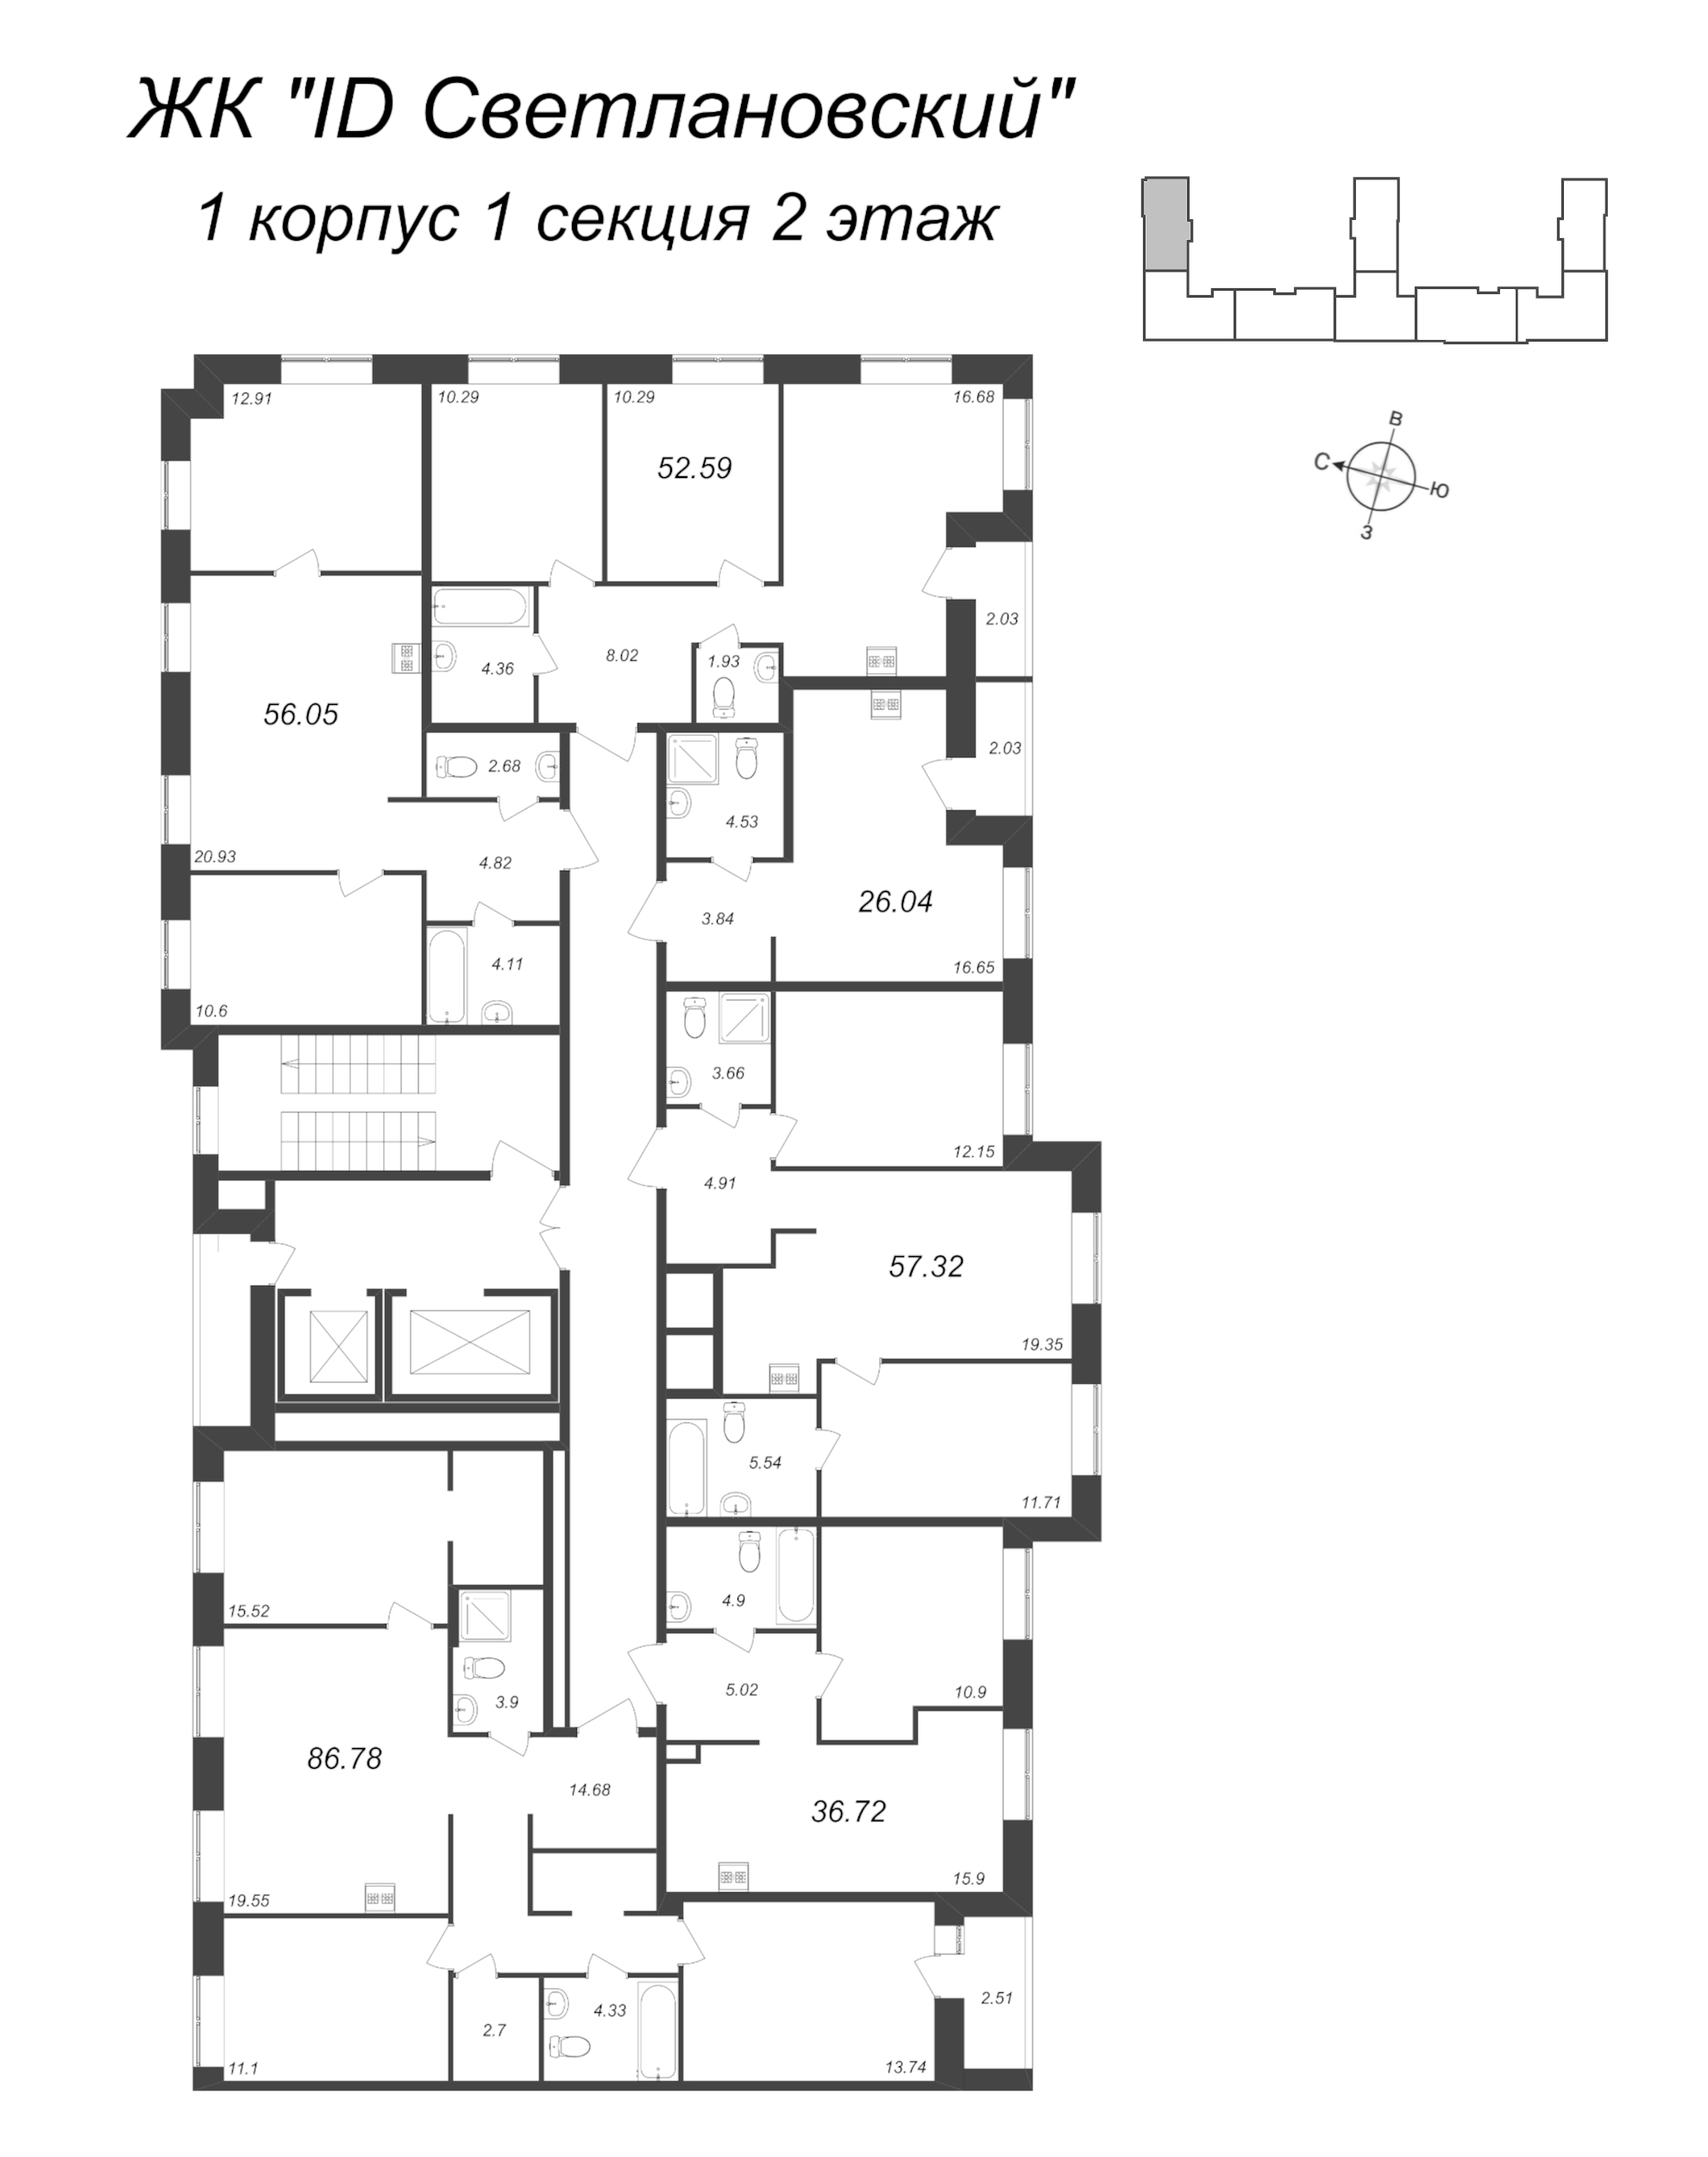 4-комнатная (Евро) квартира, 86.78 м² - планировка этажа